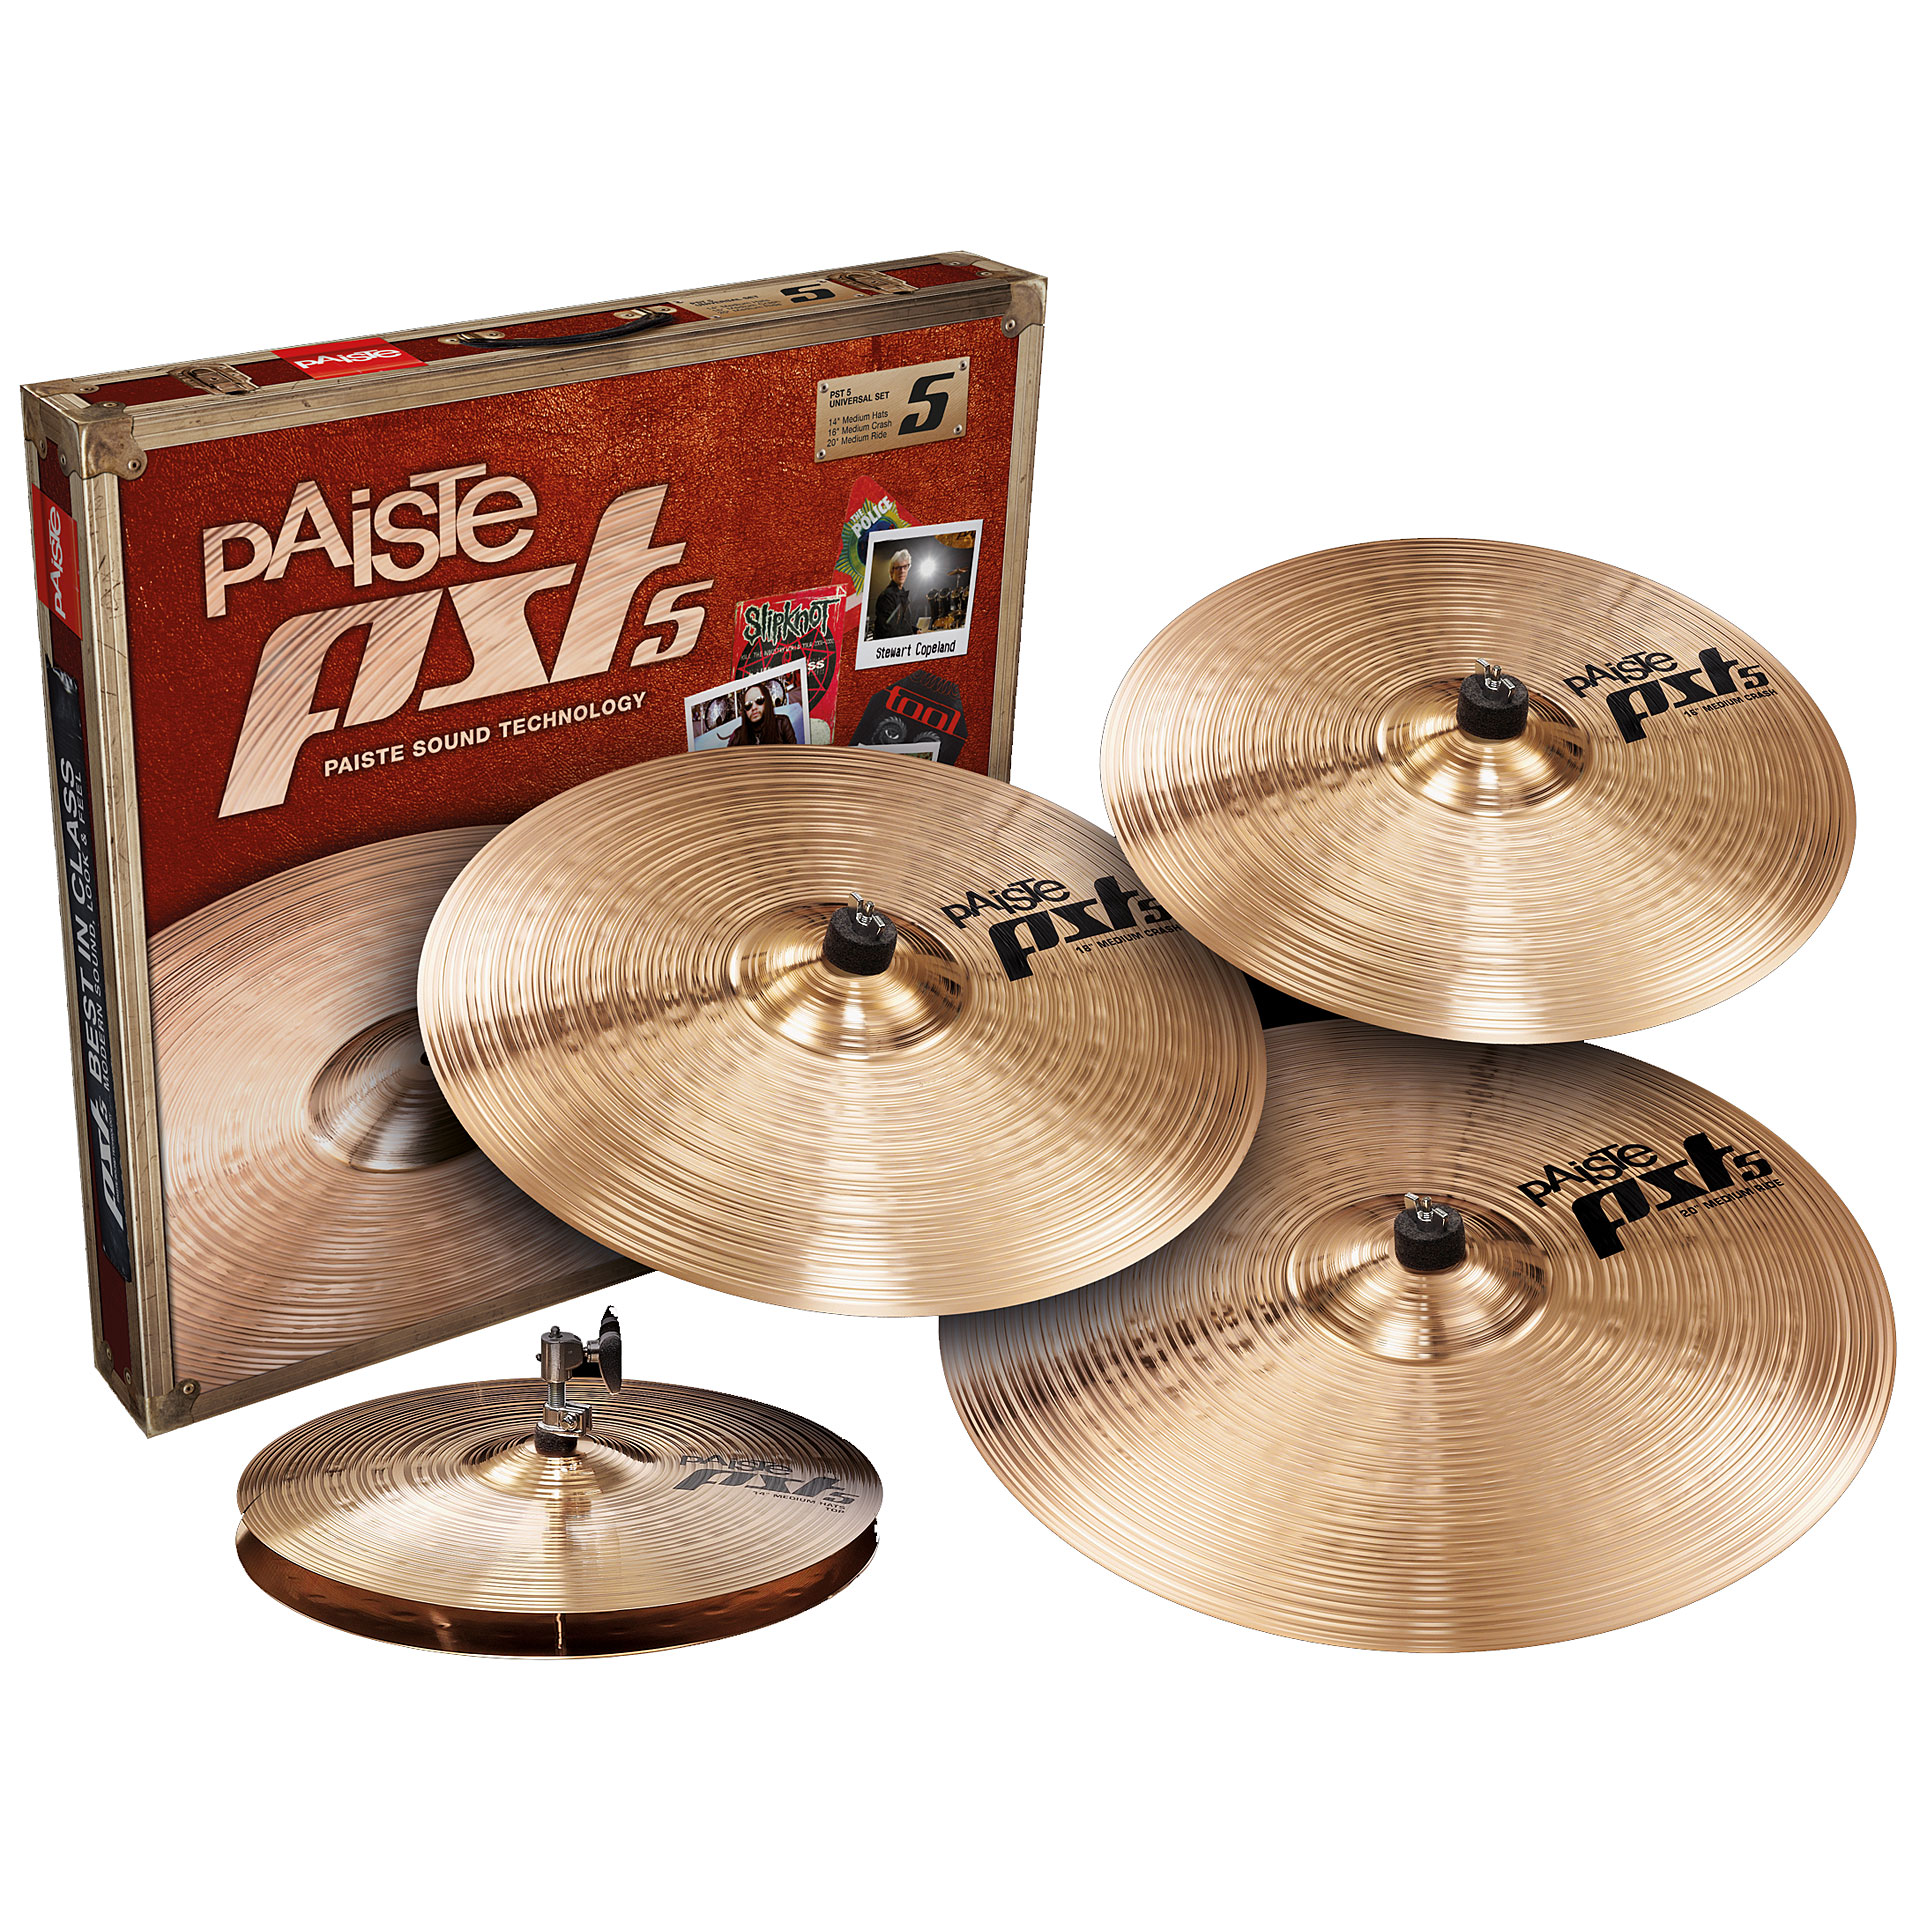 Buy Paiste universal cymbal set onlinein India